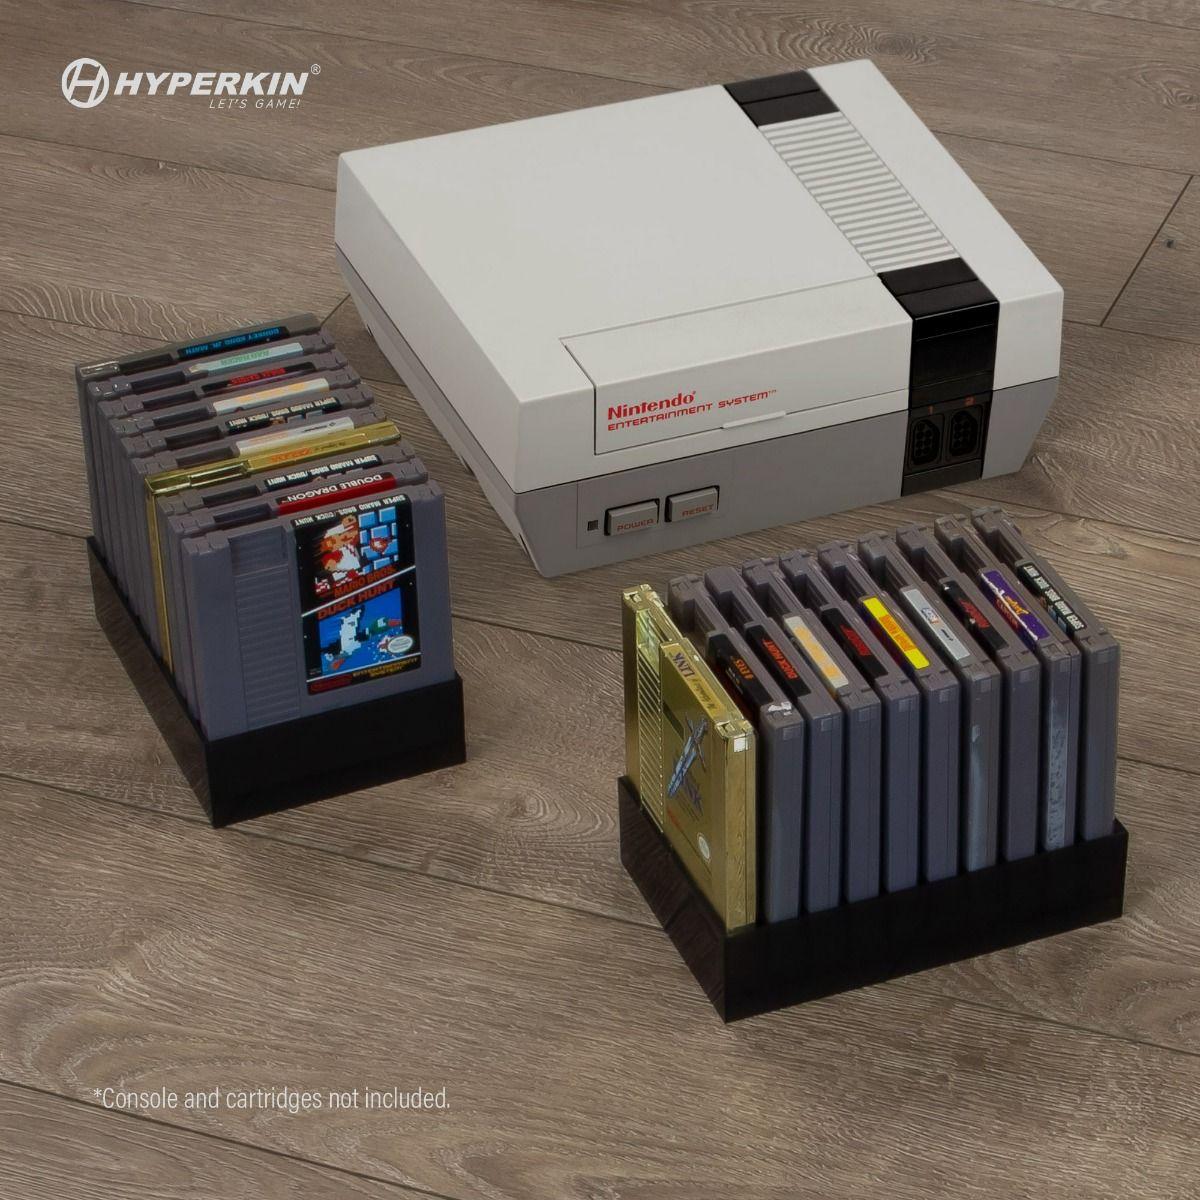 NES 10-Cartridge Storage Stand (2 Pack)